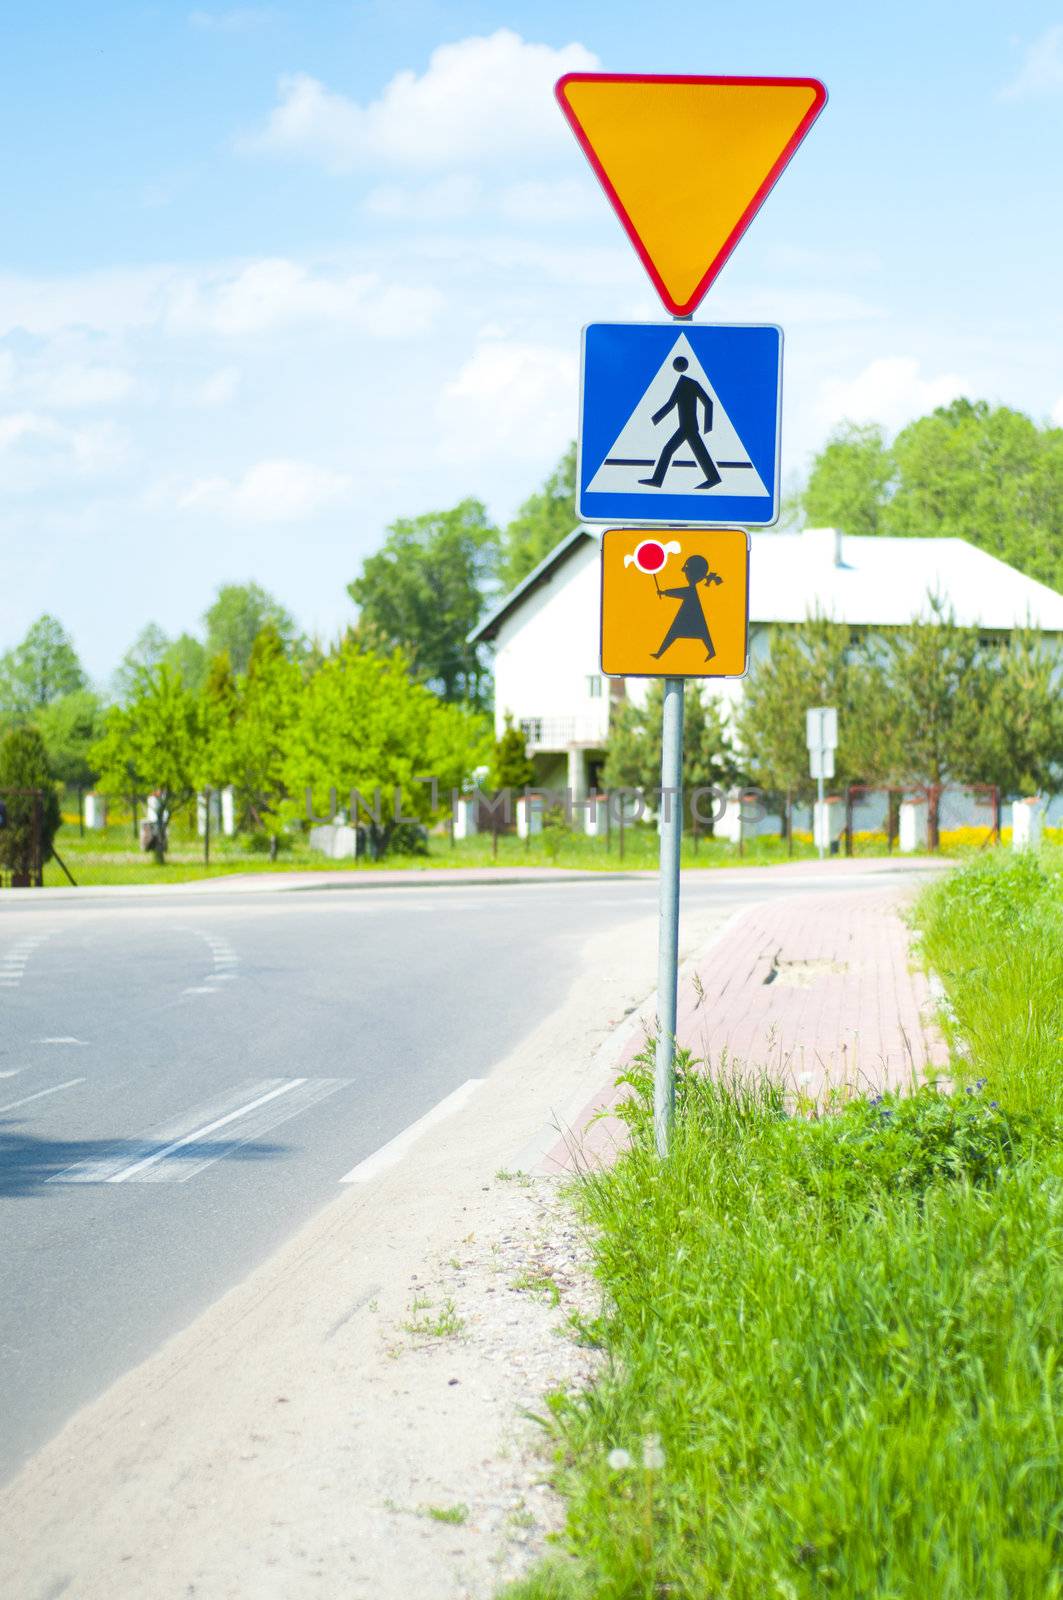 tree road signs, pedestrian crossing